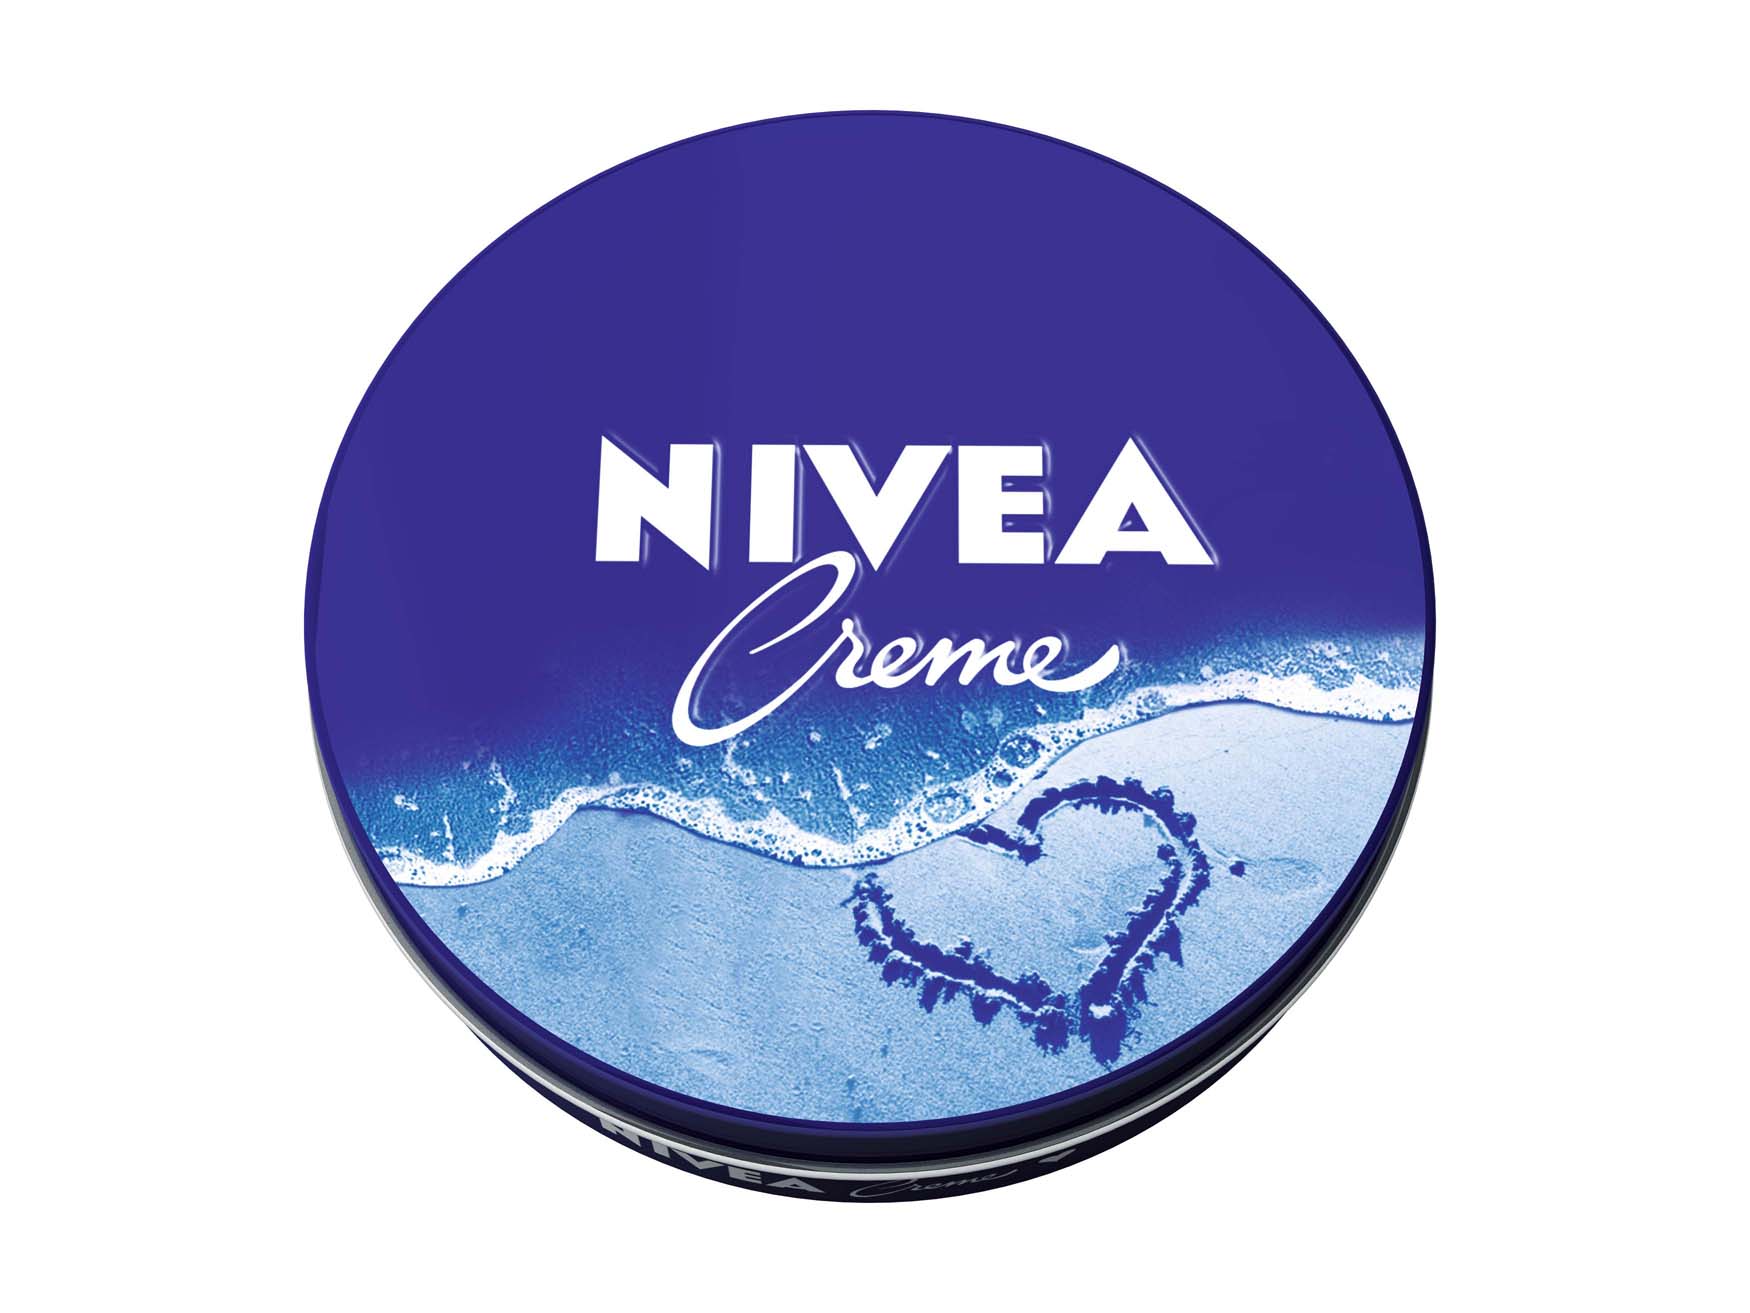 NIVEA Creme_beach_l.jpg